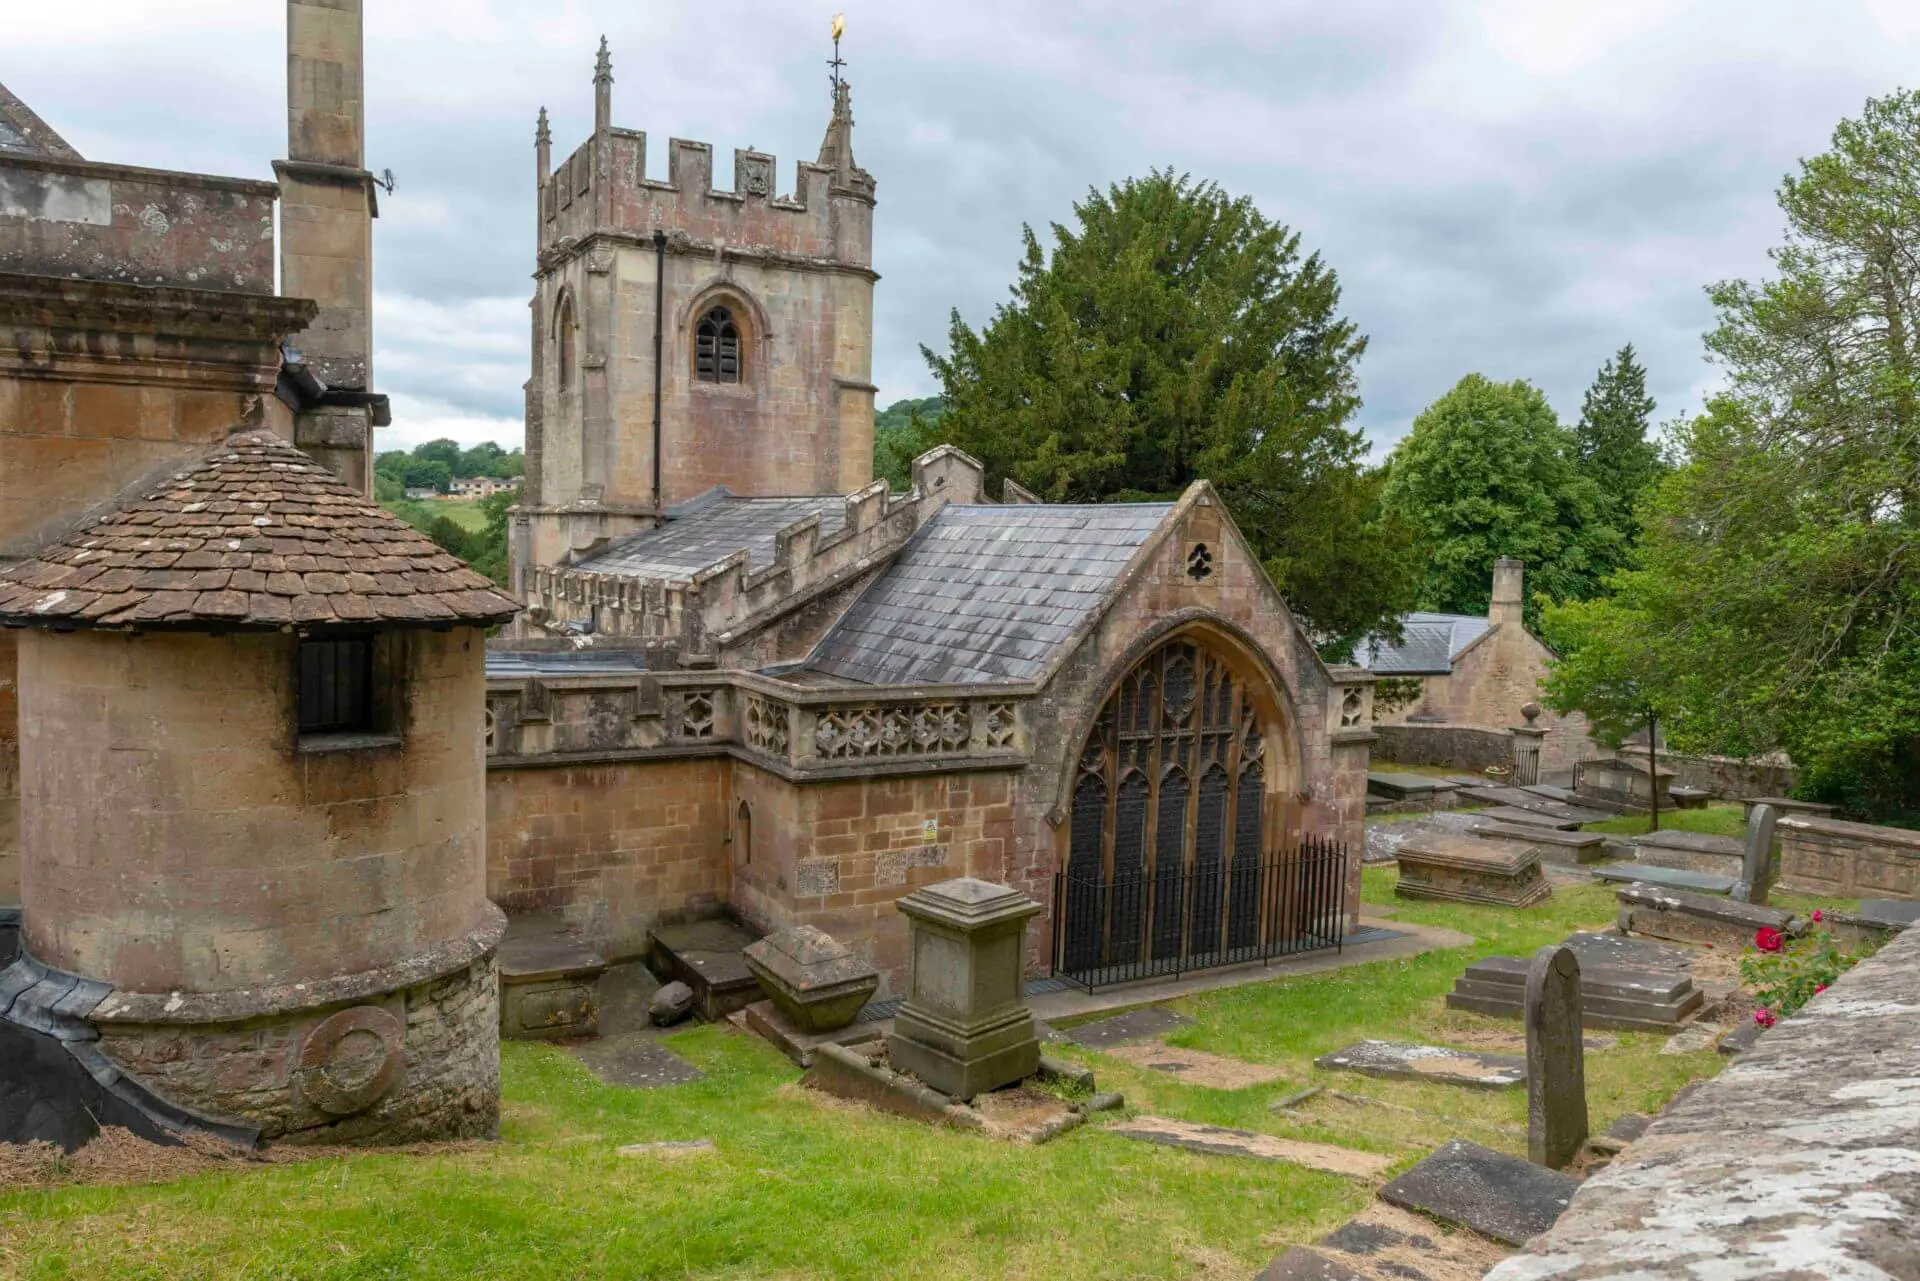 Thomas Becket Church and Cemetery in Bath England